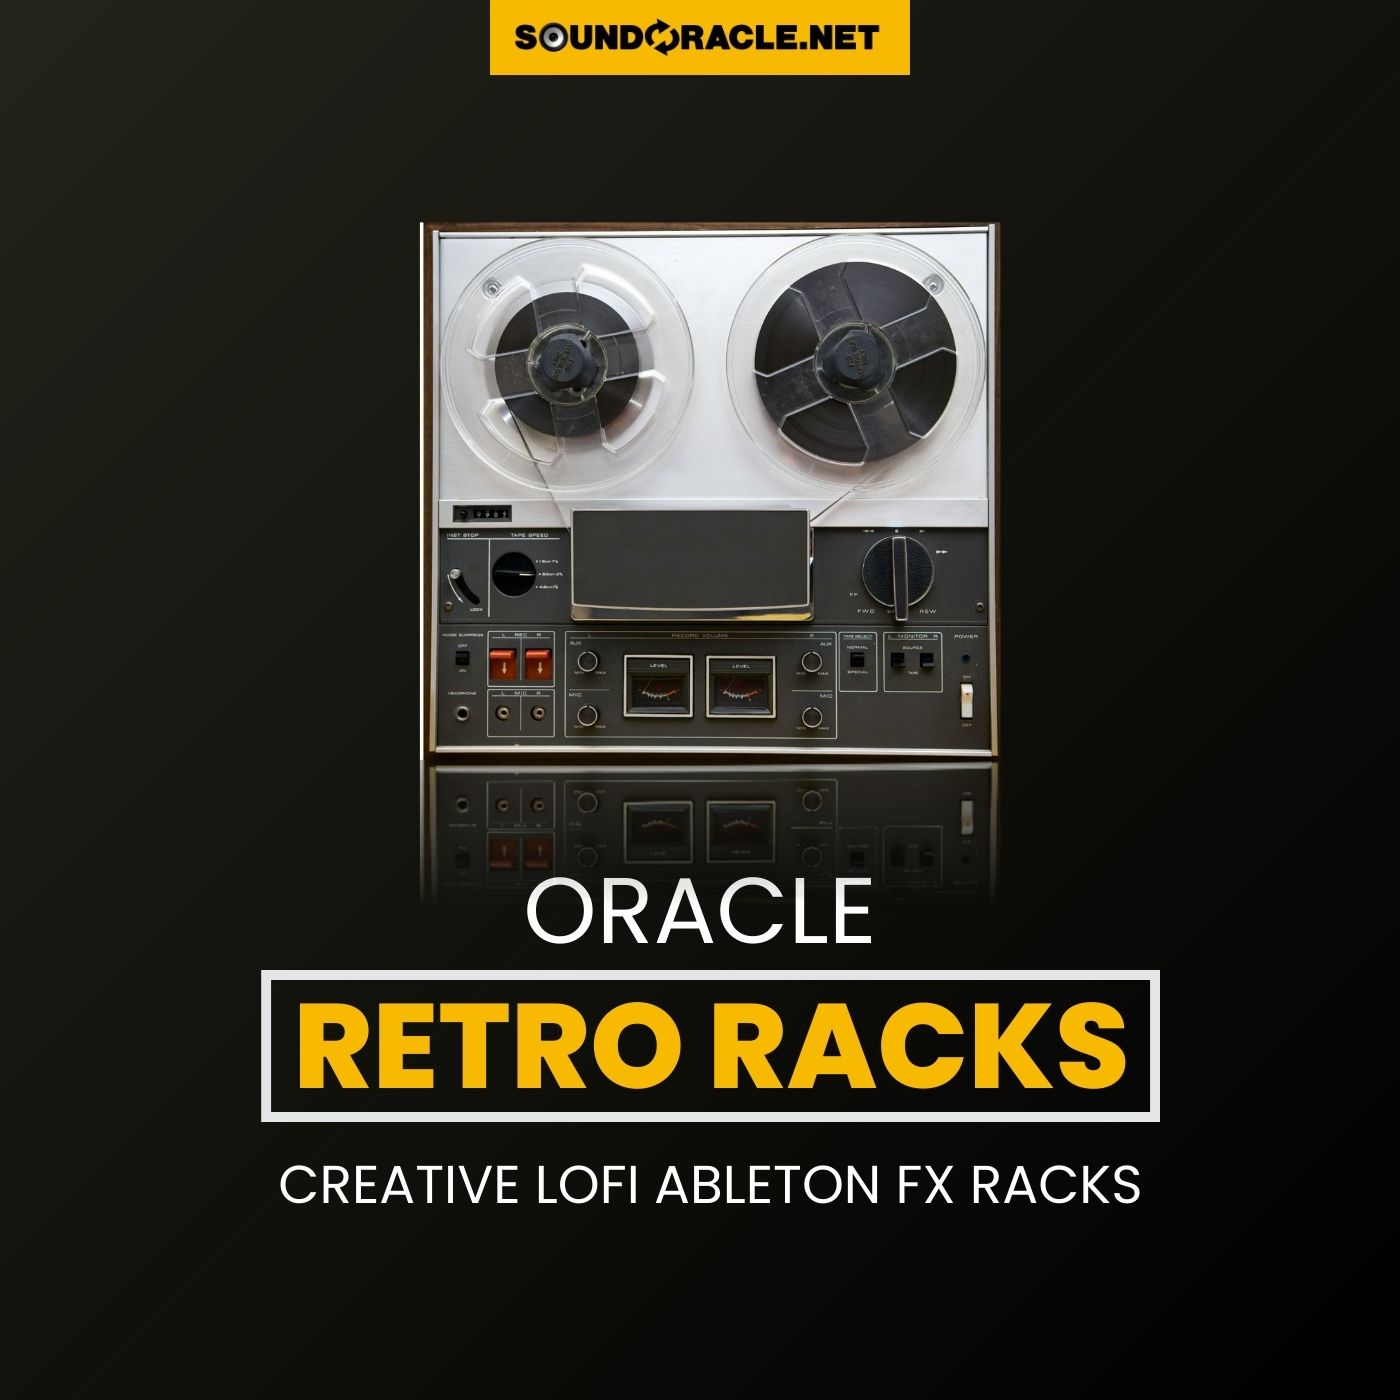 The Oracle Retro Racks